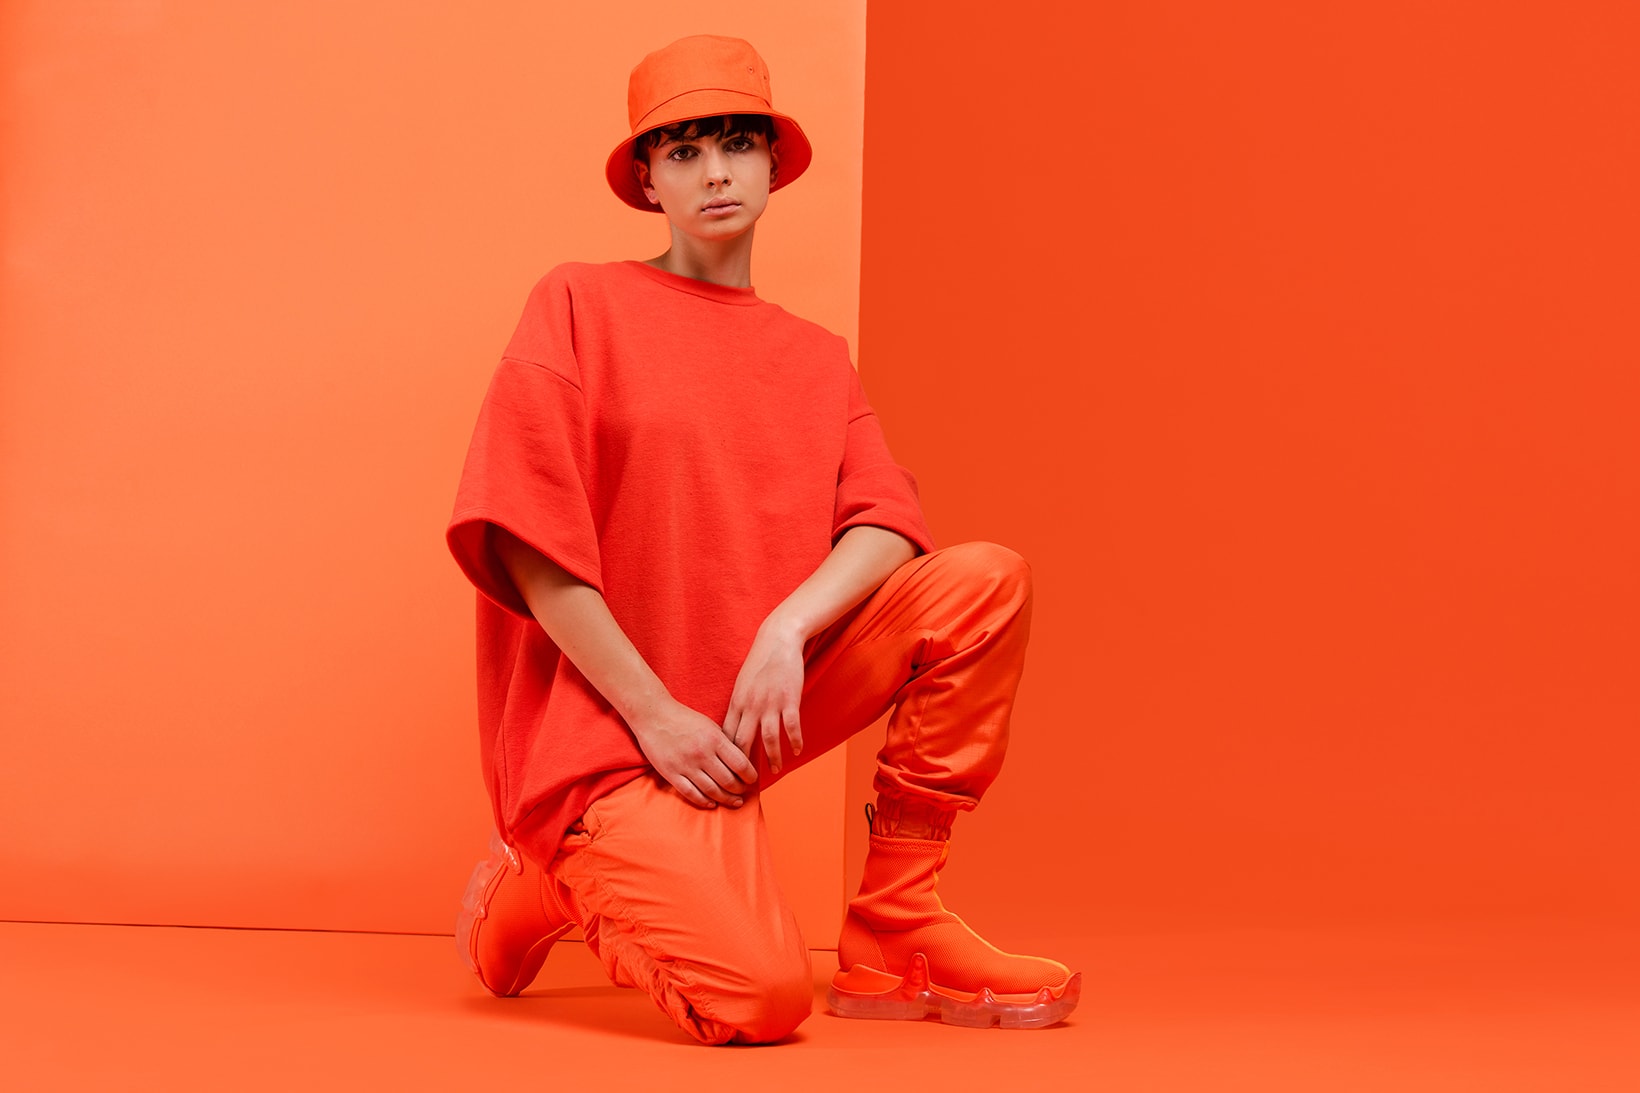 SWEAR Air Revive Trigger Pop Colour Platform Sneaker Boots Neon Orange Powder Pink Royal Blue